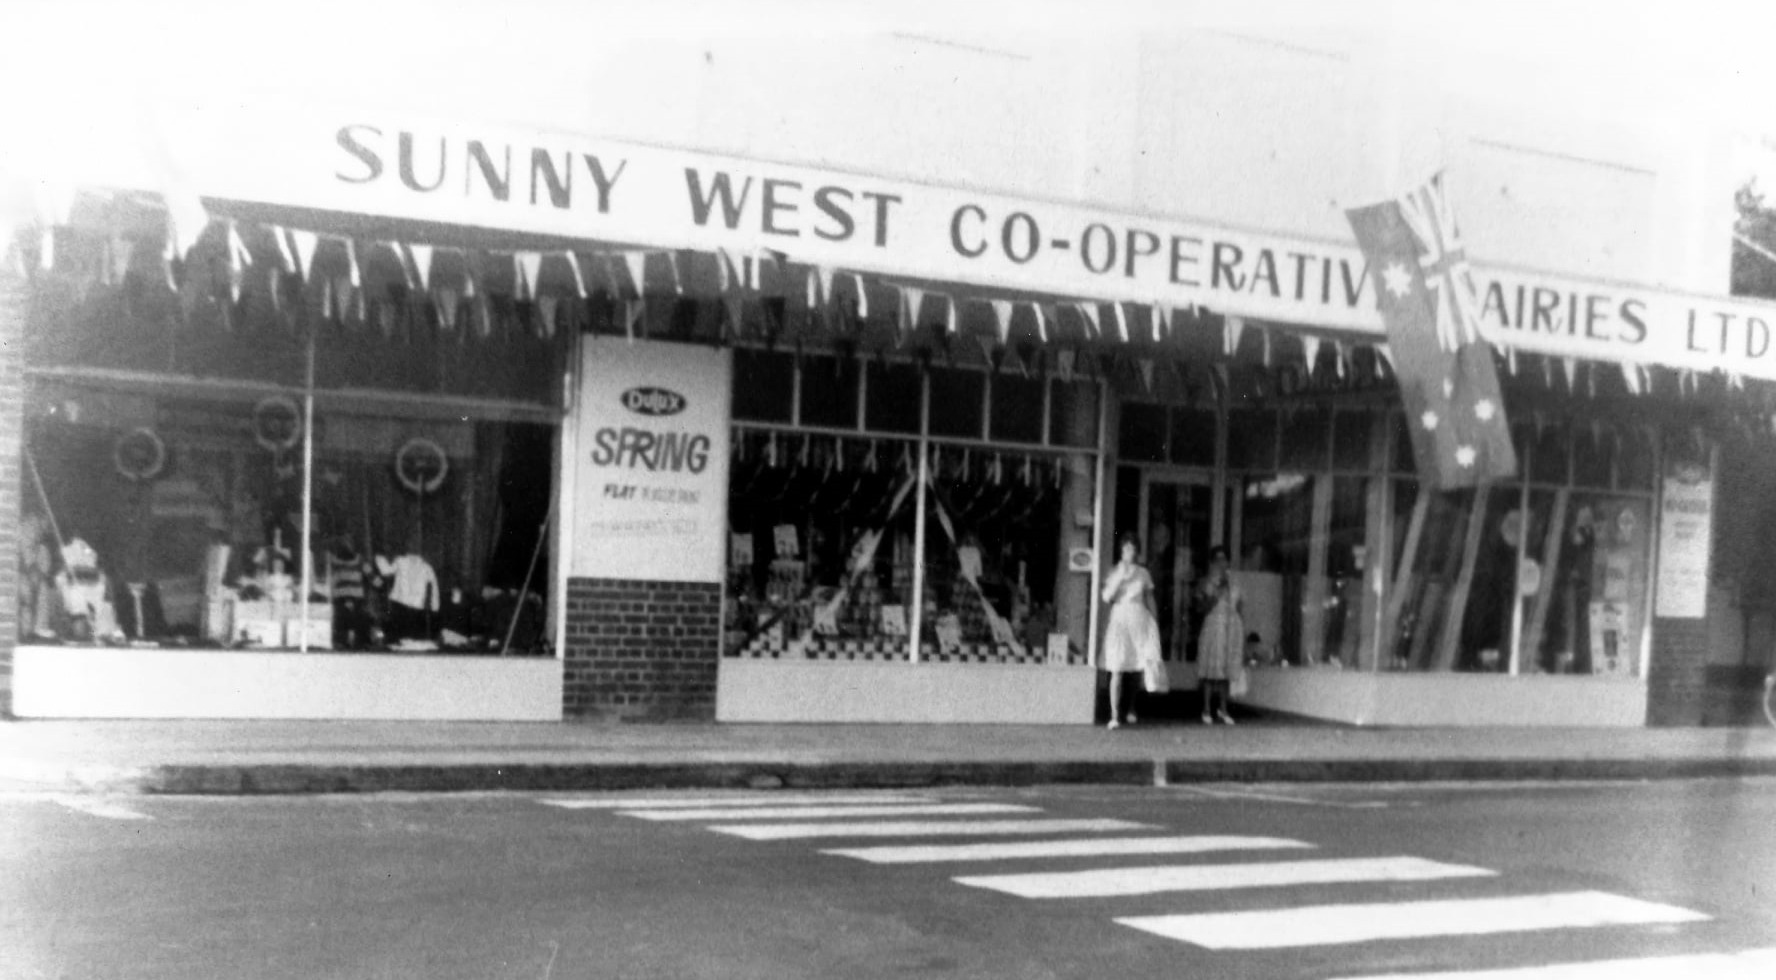 The-Sunny-West-Coop-1960s-Harvey-History-Online.jpg